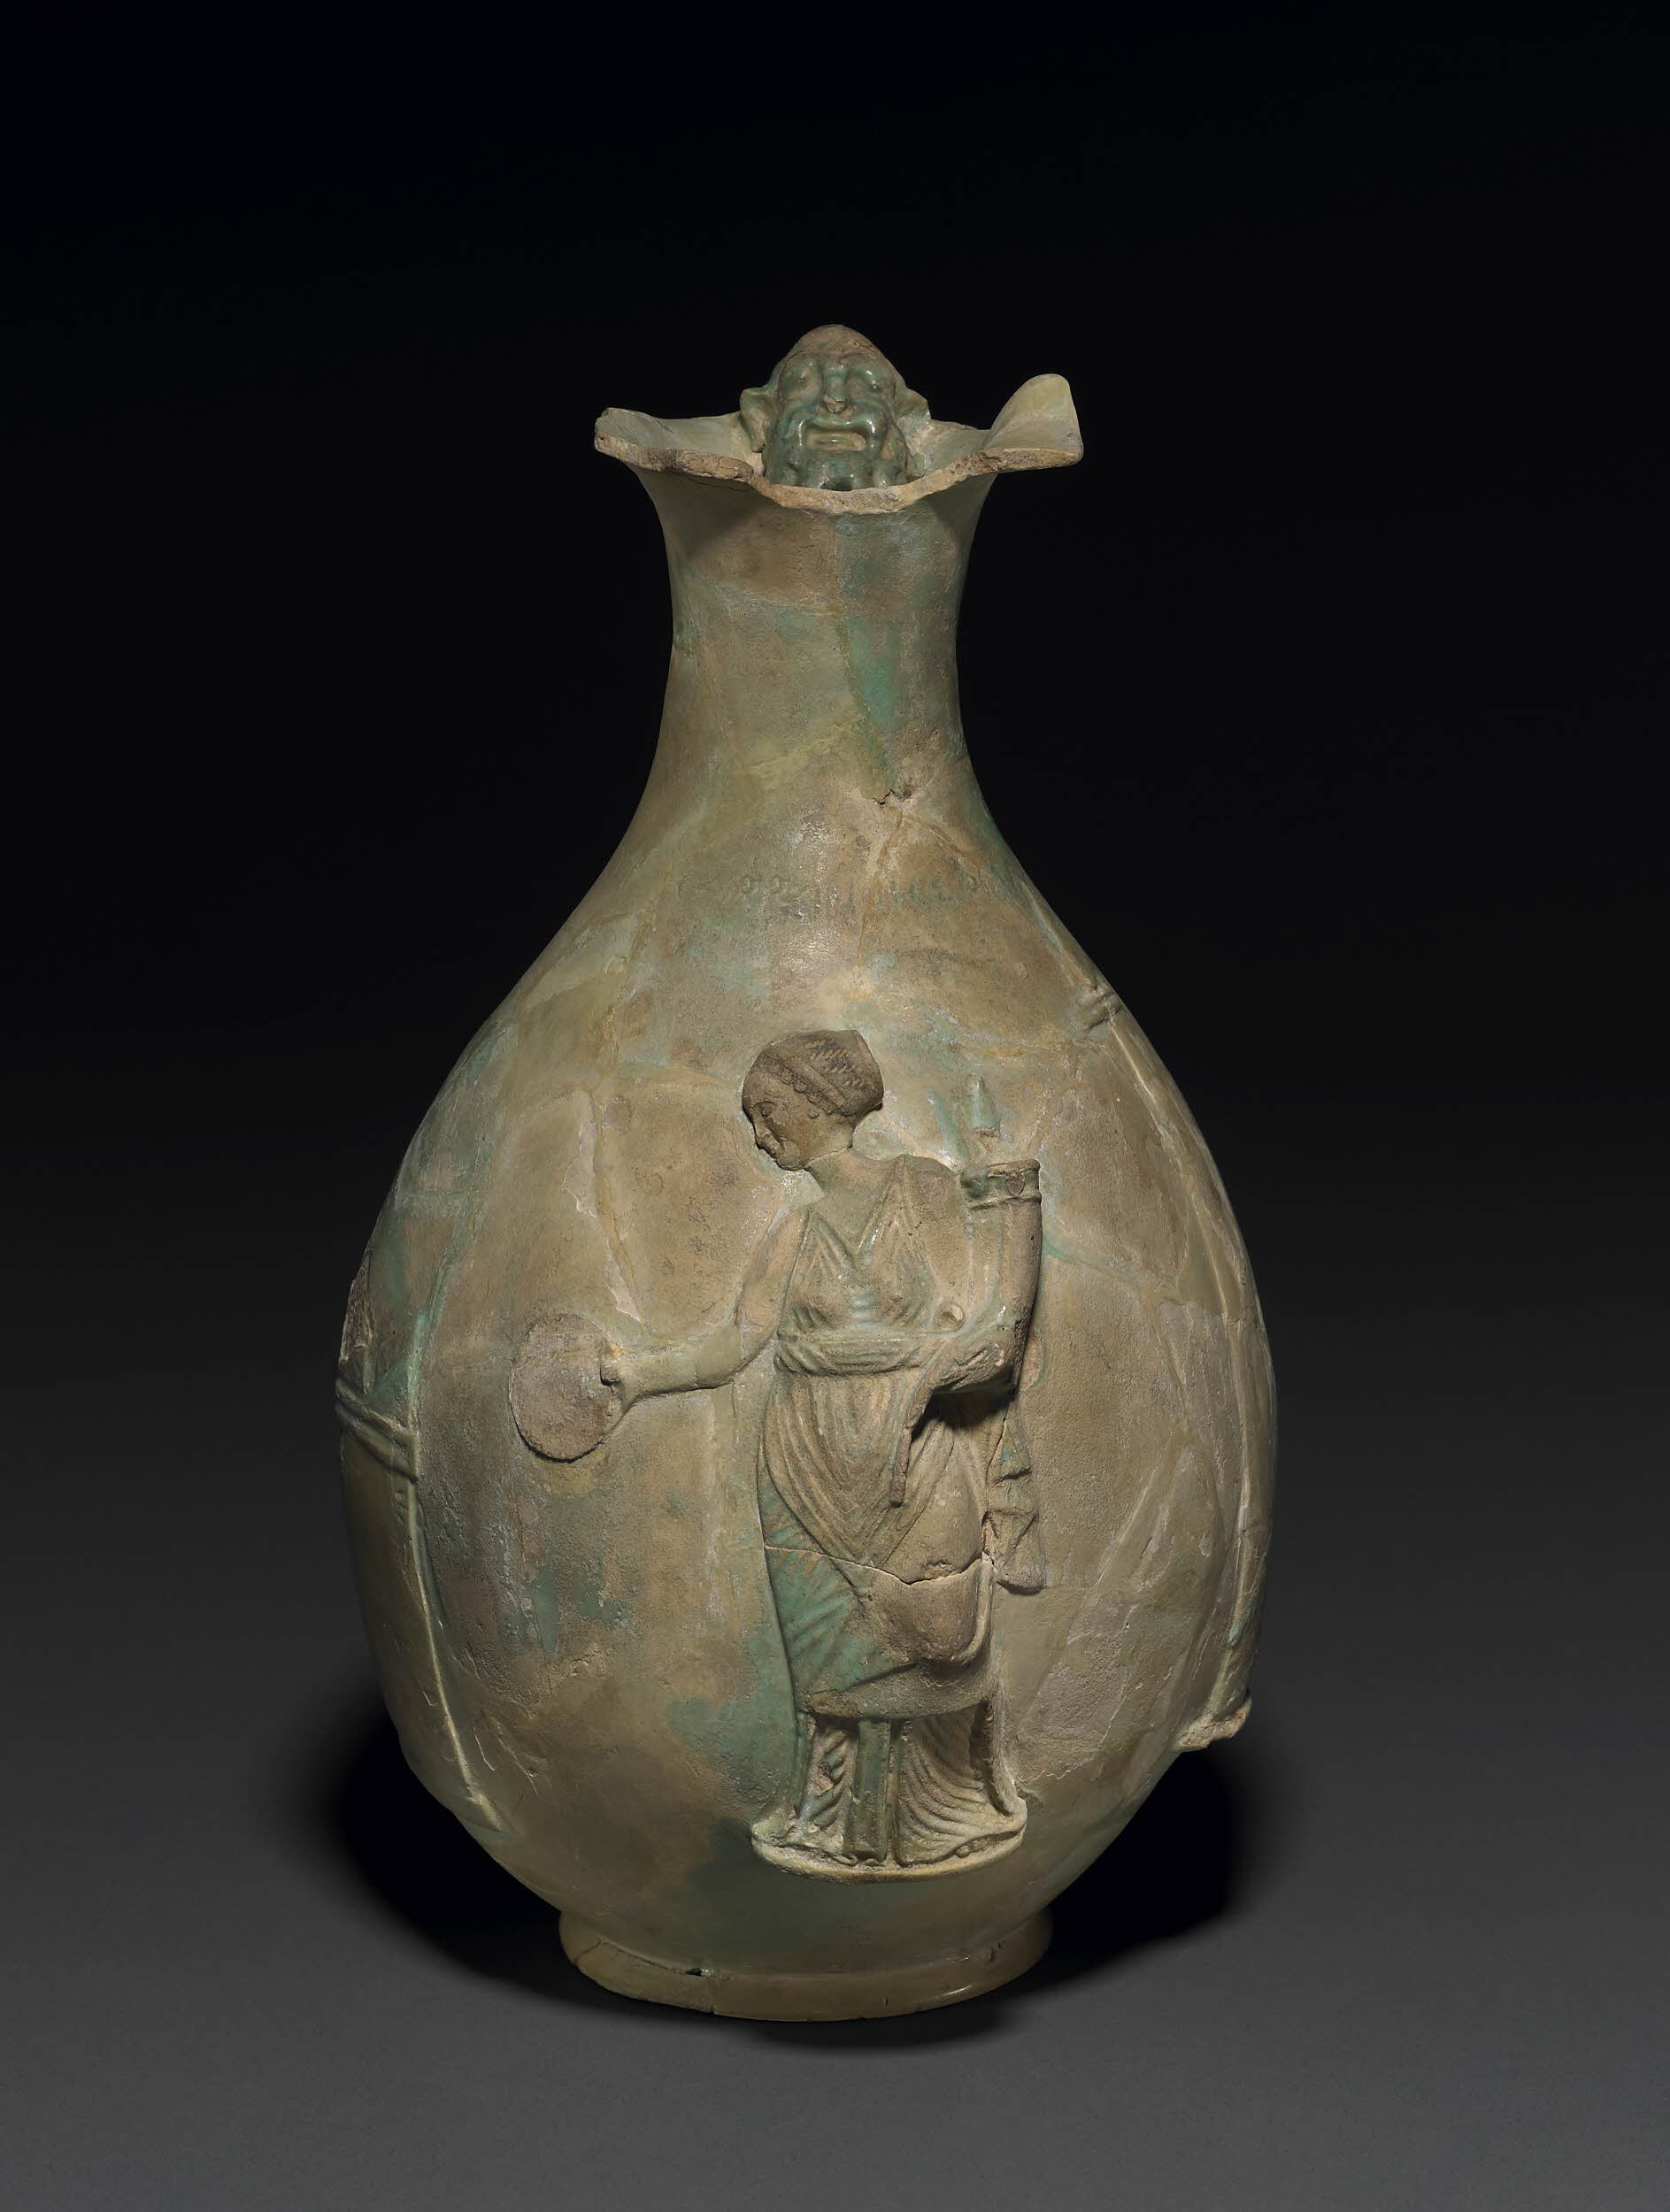 A vase showing Arsinoe II being bountiful